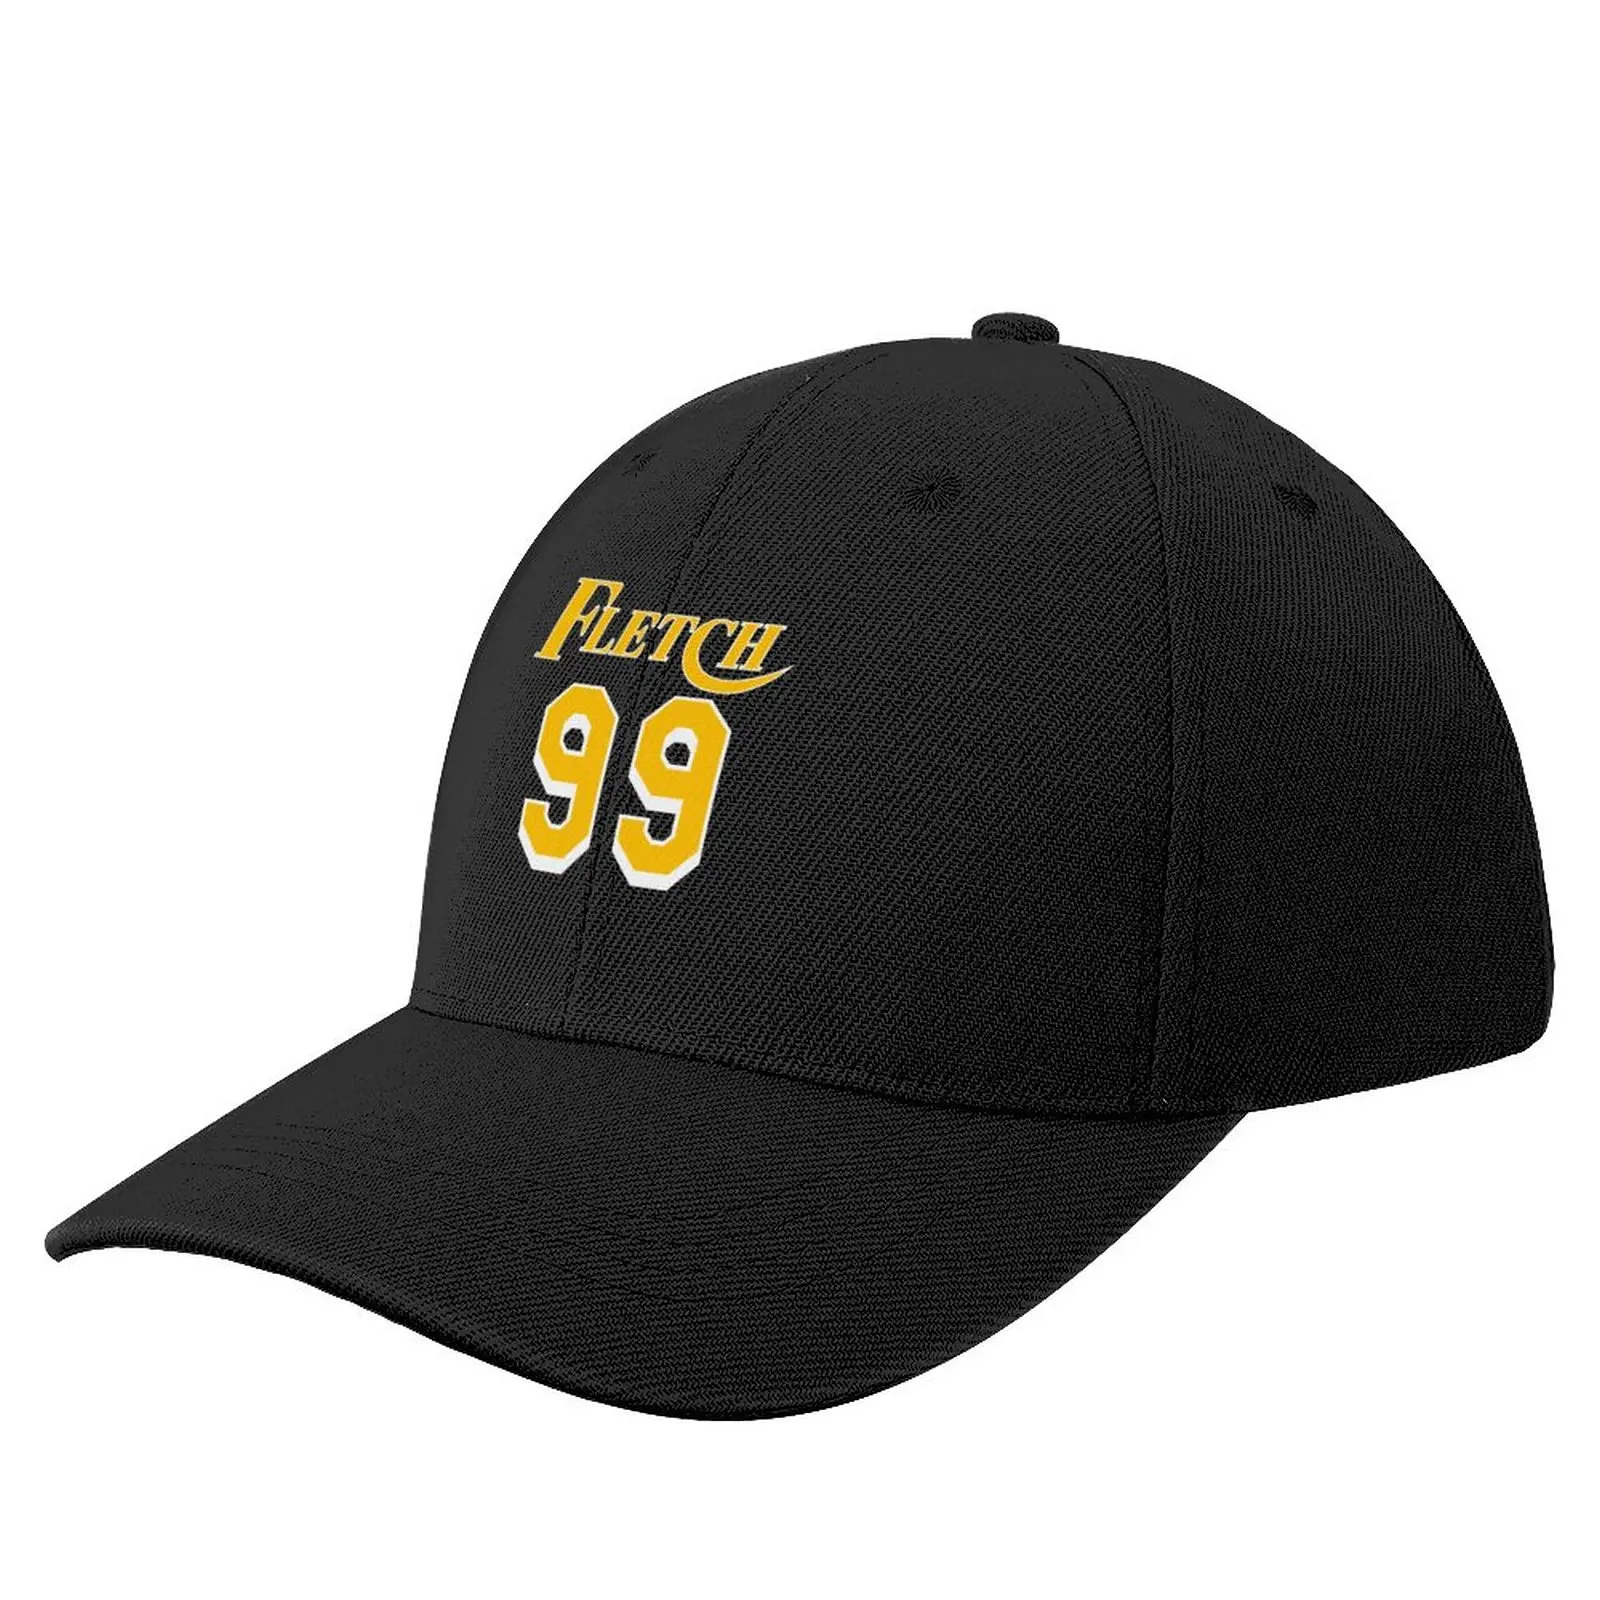 

Fletch 99 Baseball Cap Golf Wear Hats Christmas Hat Designer Hat Boy Child Hat Women's